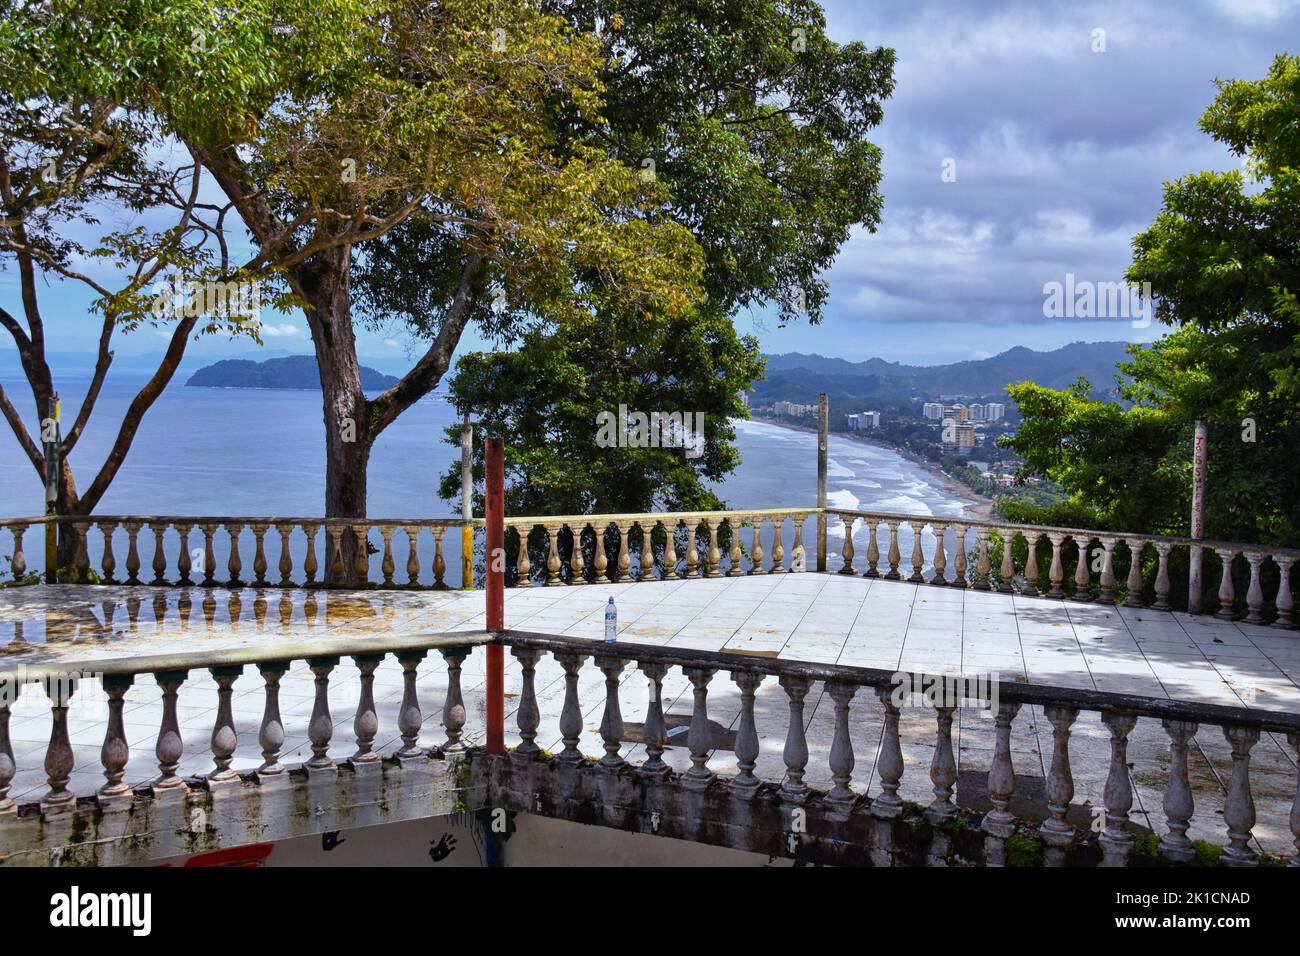 Jaco Beach Ocean City And Views Costa Rica From El Miro Ruins Mansion Declared Biological Corridor Summer 2022 Central America 2K1CNAD 